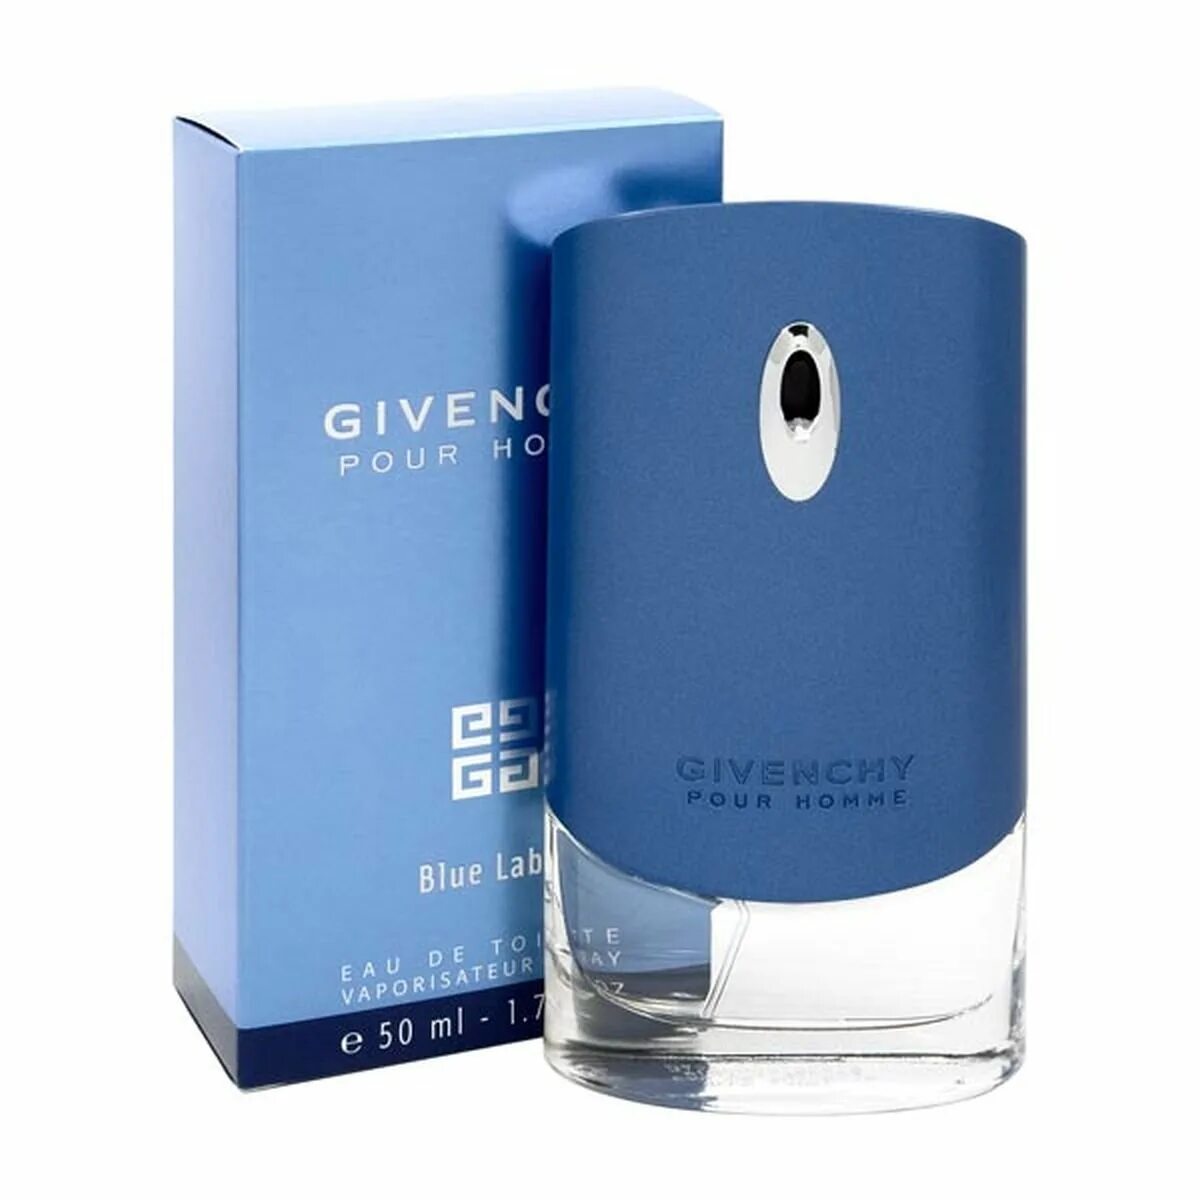 Givenchy Blue Label. Дживанши мужские Блю 50мл. Givenchy Blue Label 50. Givenchy Blue Label (мужские) 50ml.